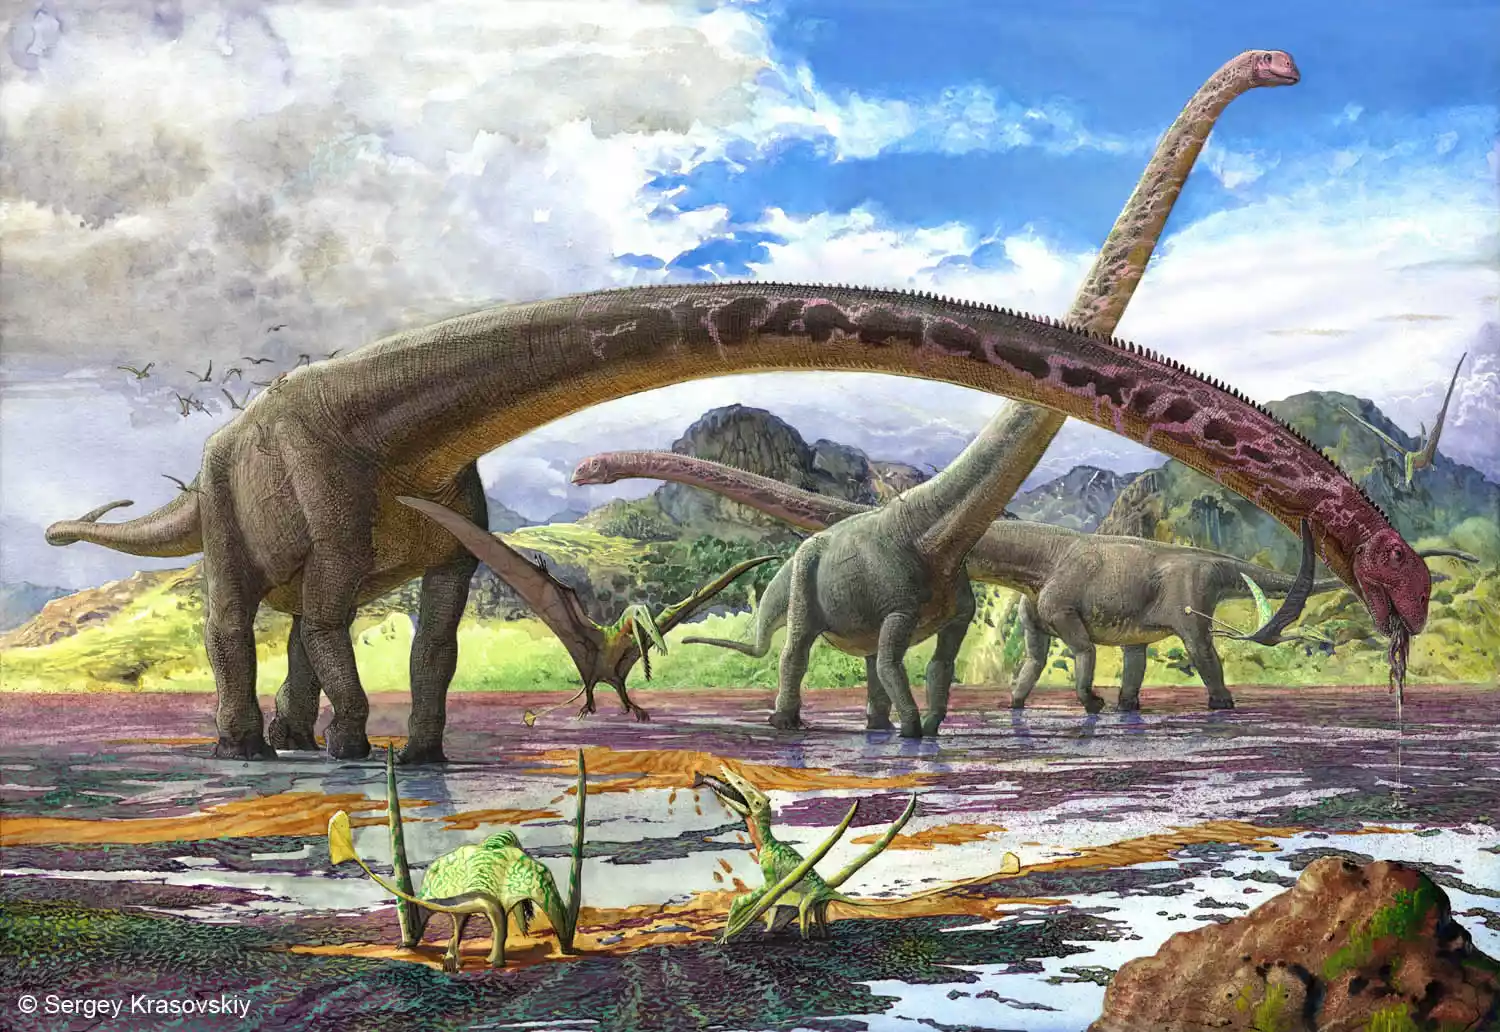 An illustration of a Mamenchisaurus. Illustration by: Sergey Krasovskiy.